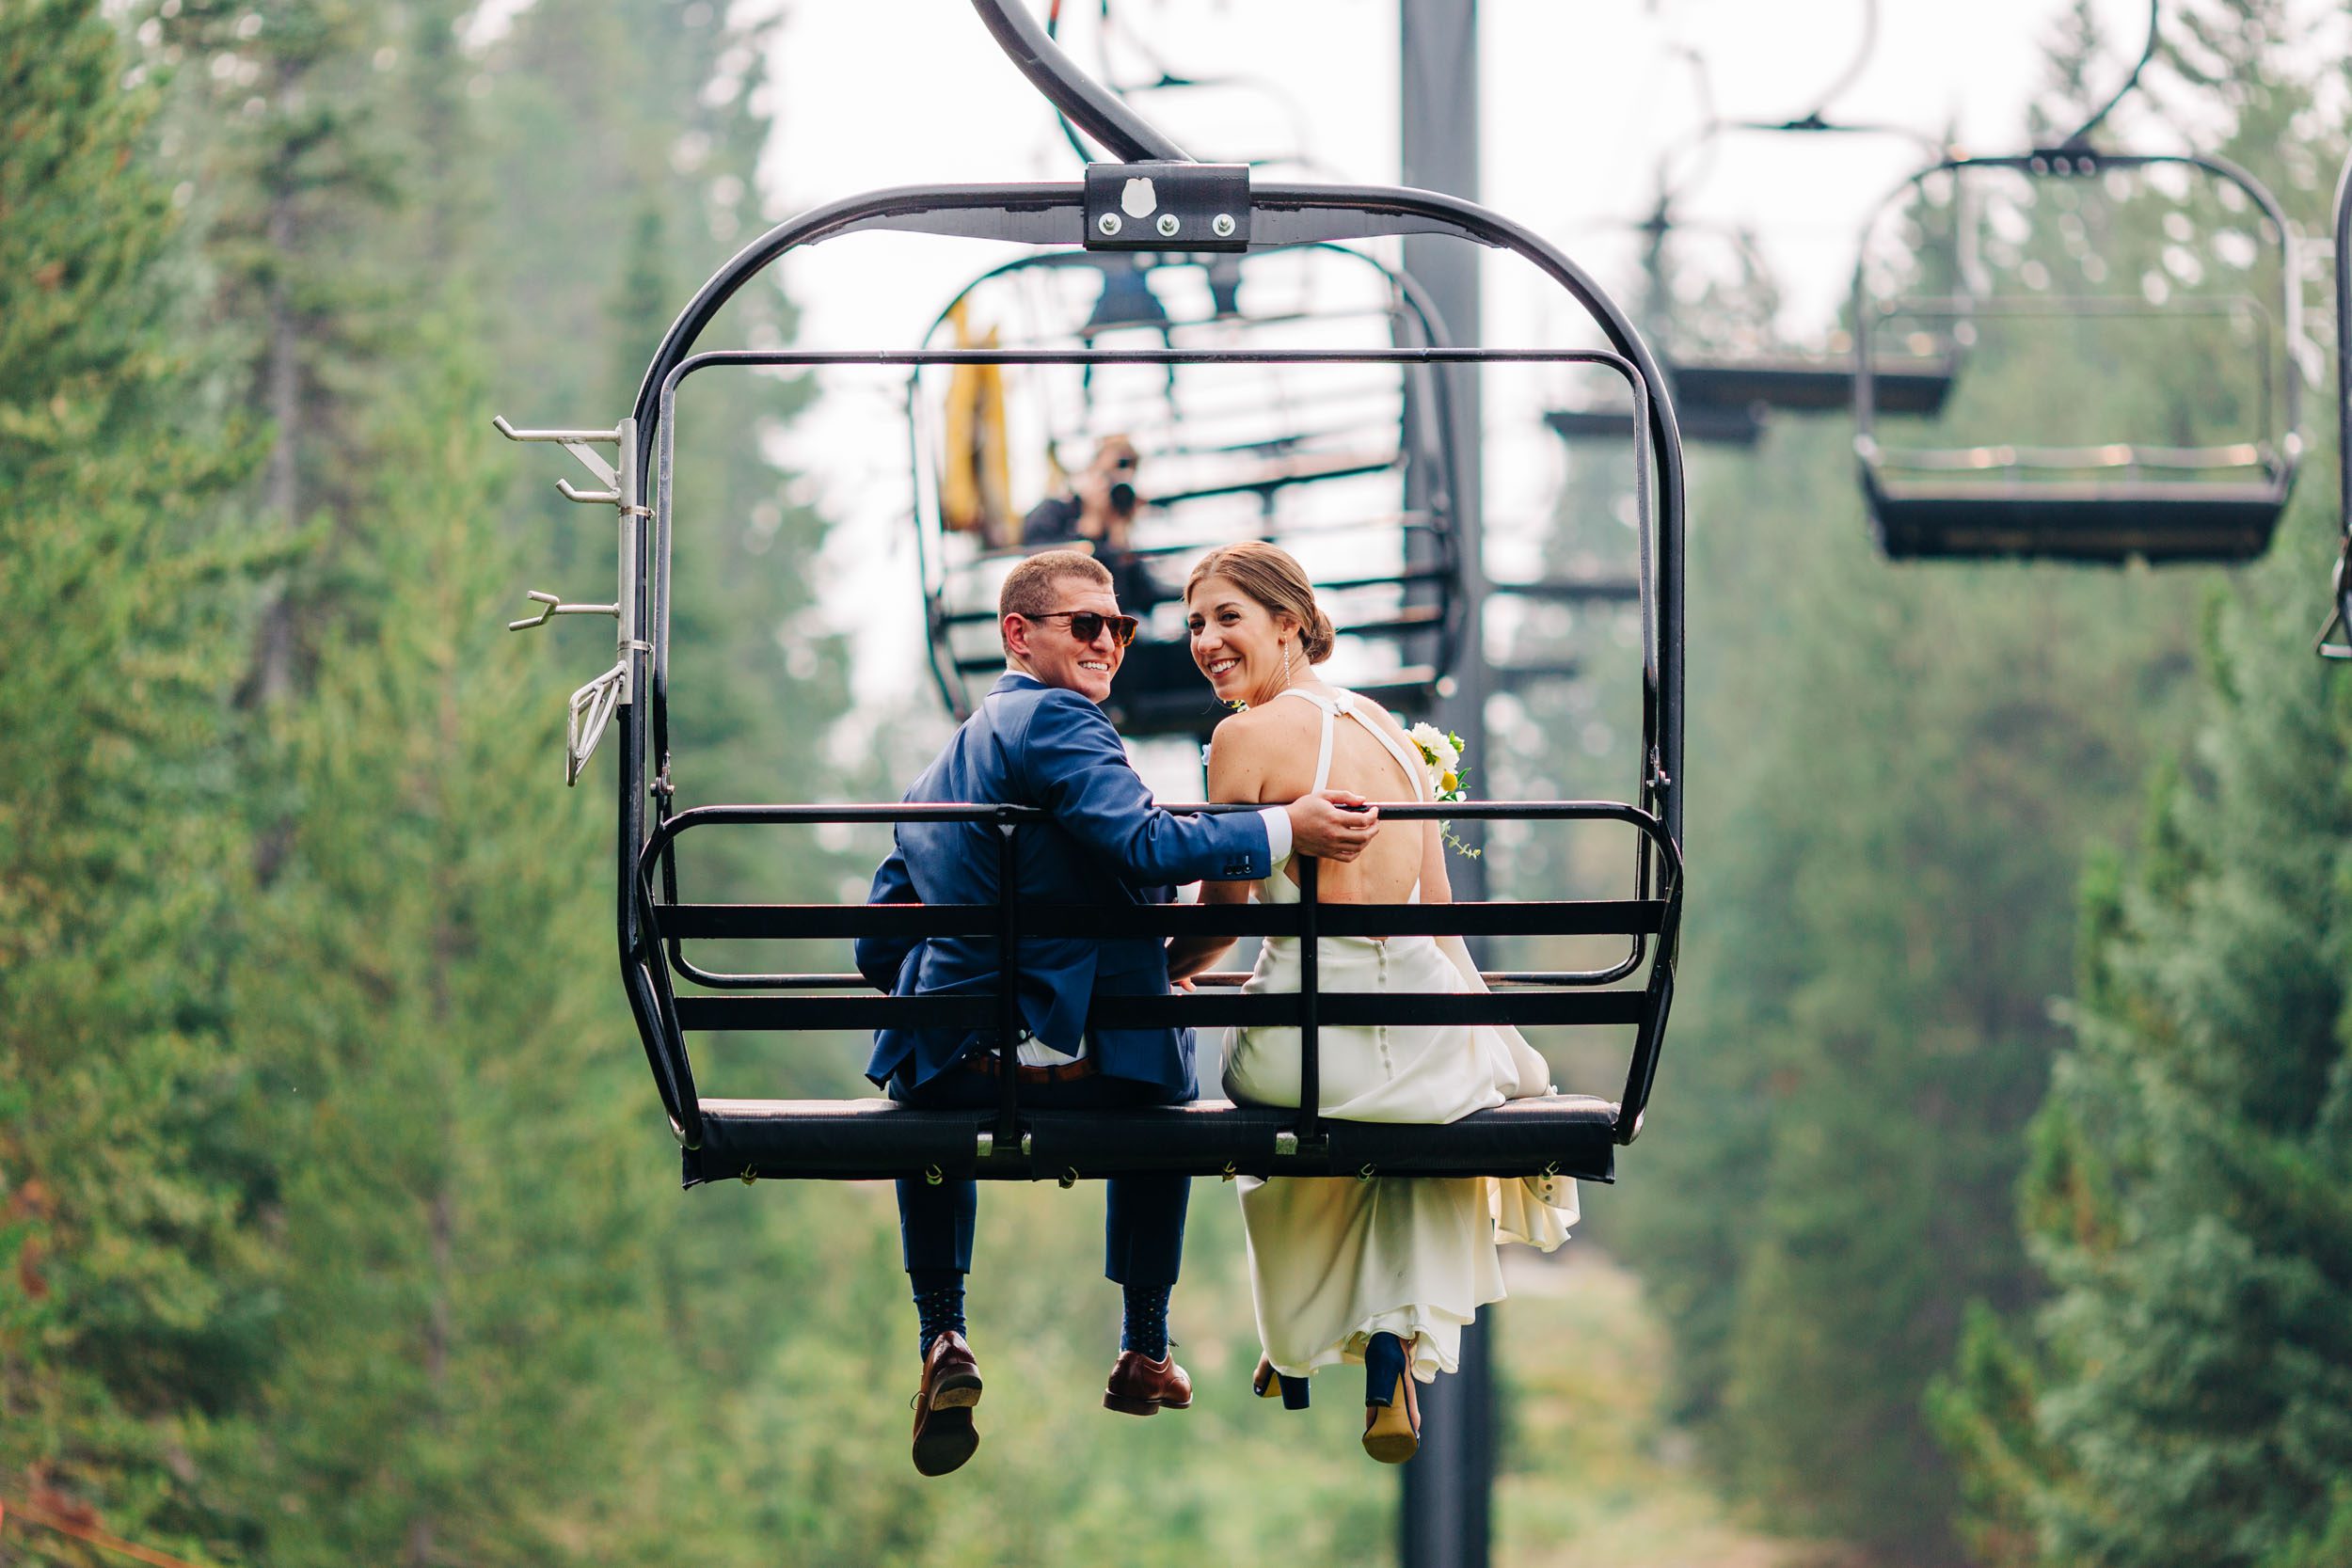 Bride and groom riding ski lift at winter park resort